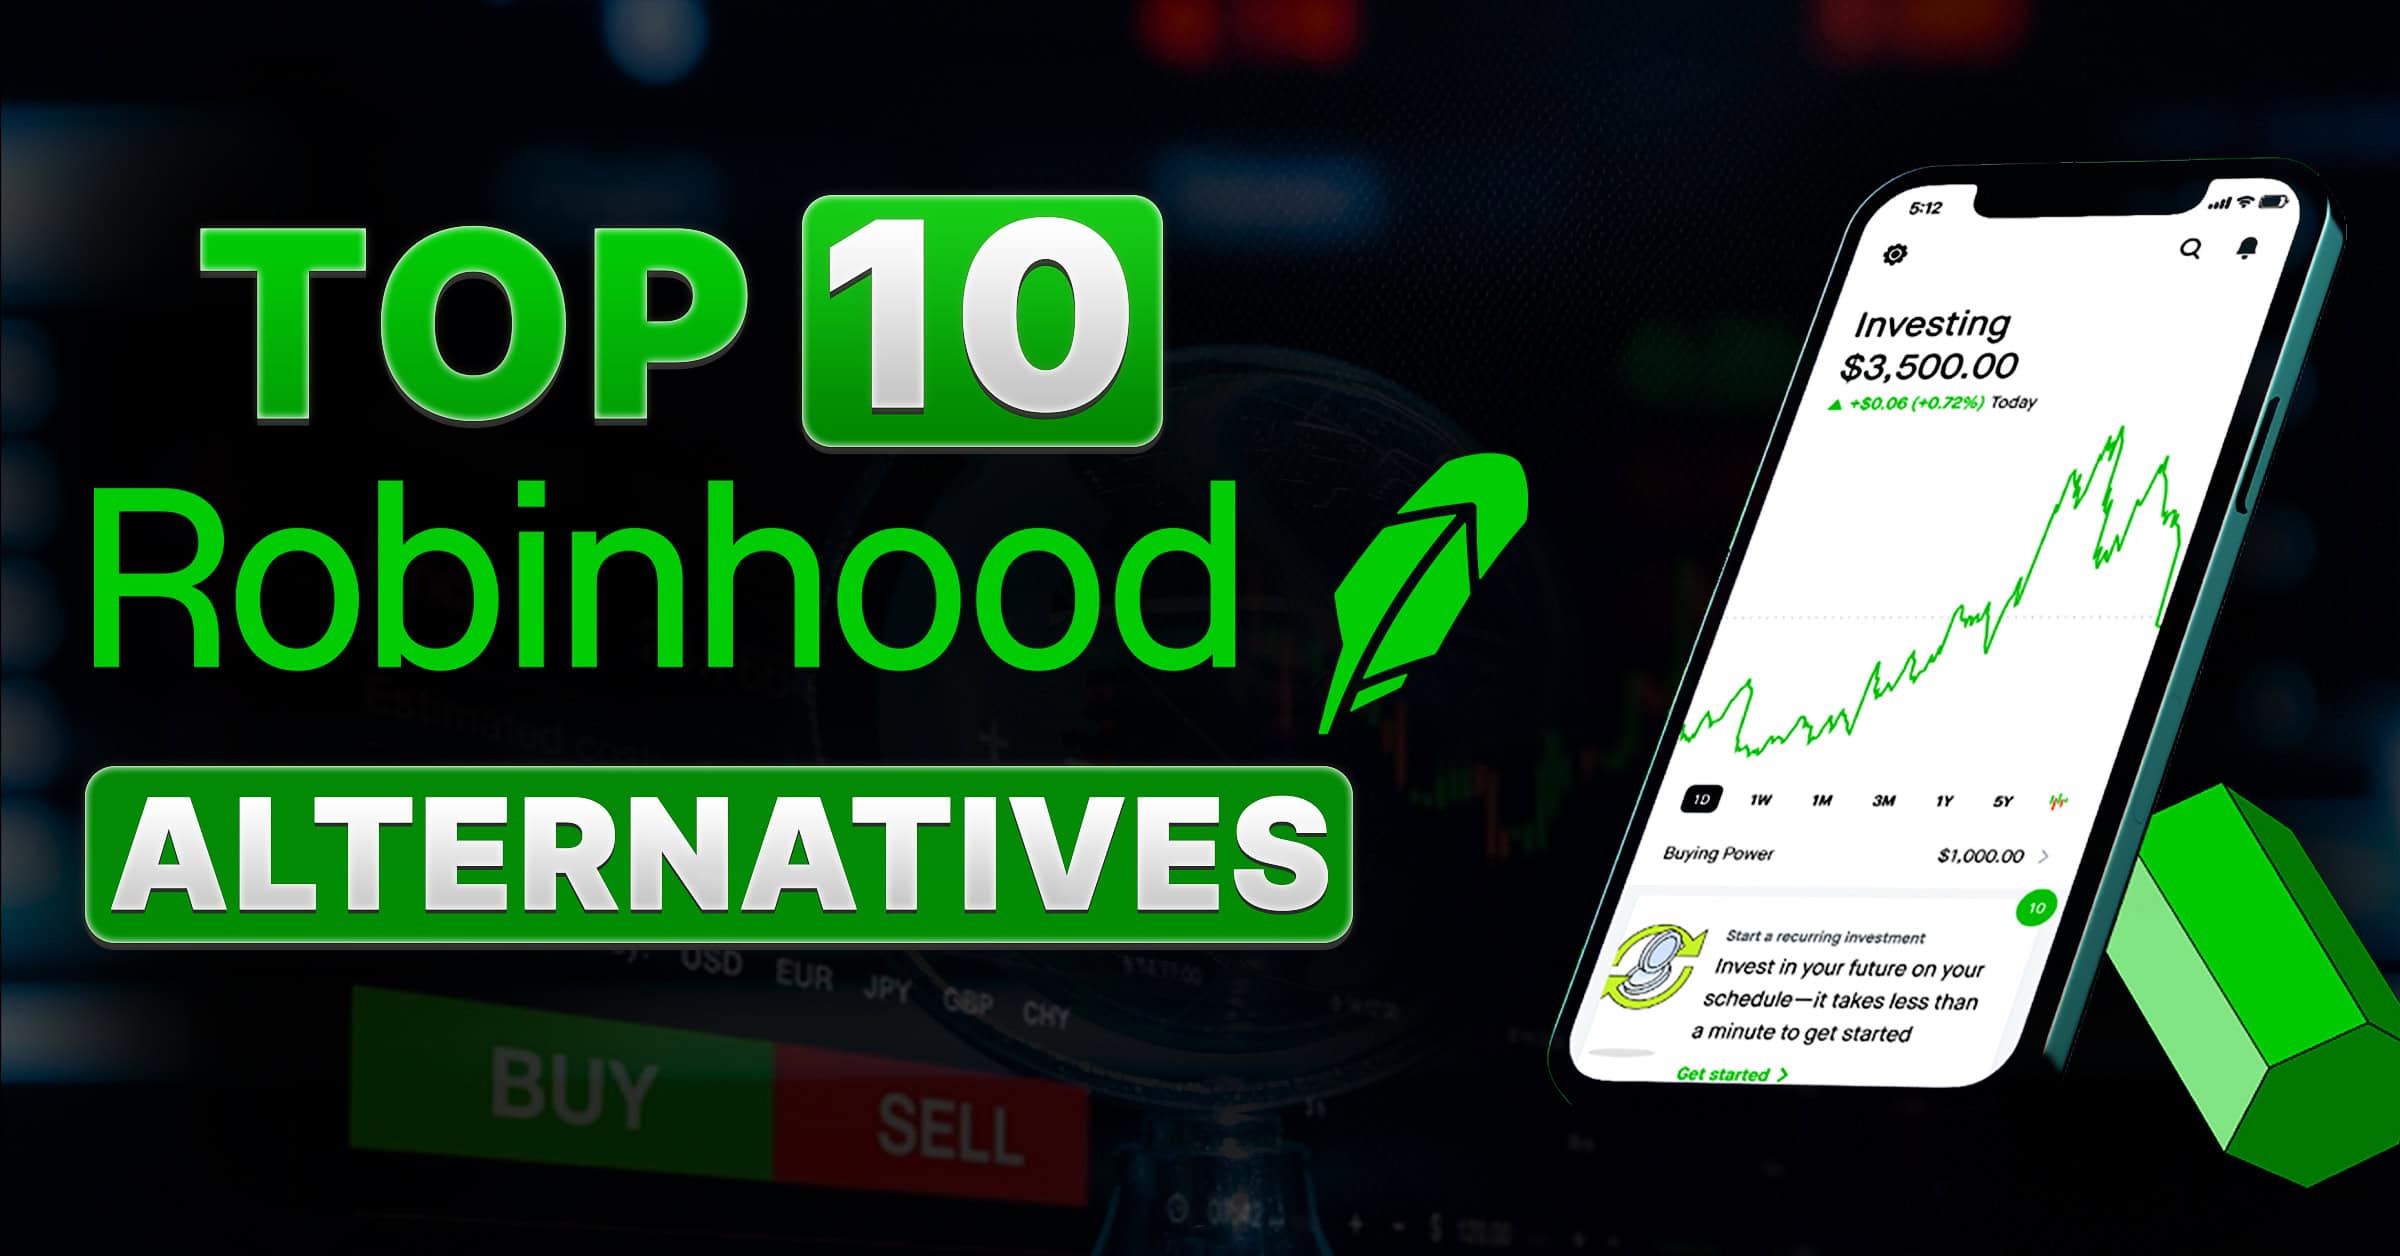 The Top 10 Robinhood Alternatives